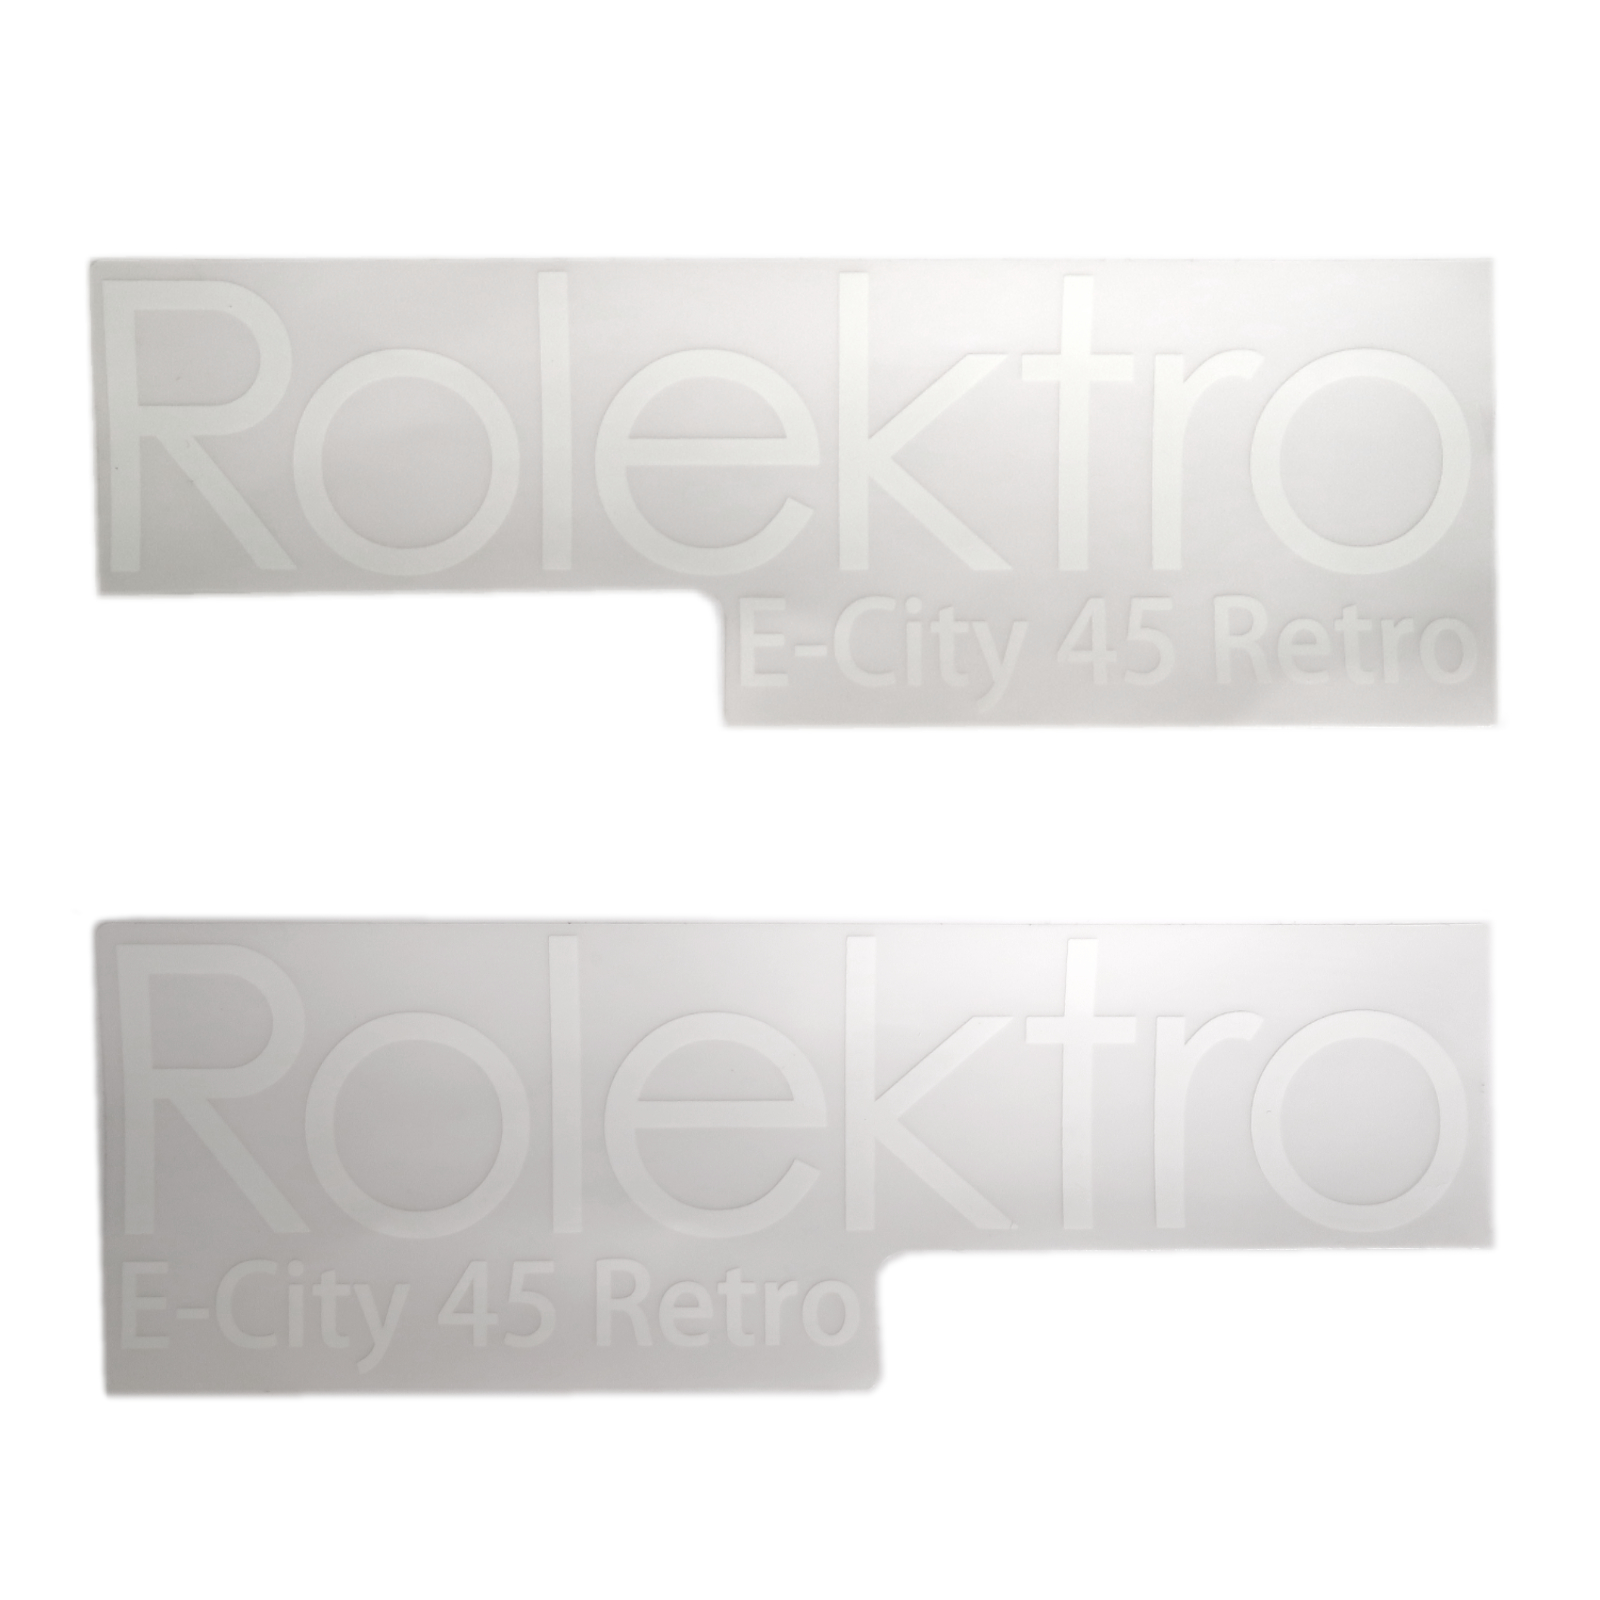 Retro45 - Aufkleber Rolektro E-City 45 Retro, für Seitenteil rechts und links